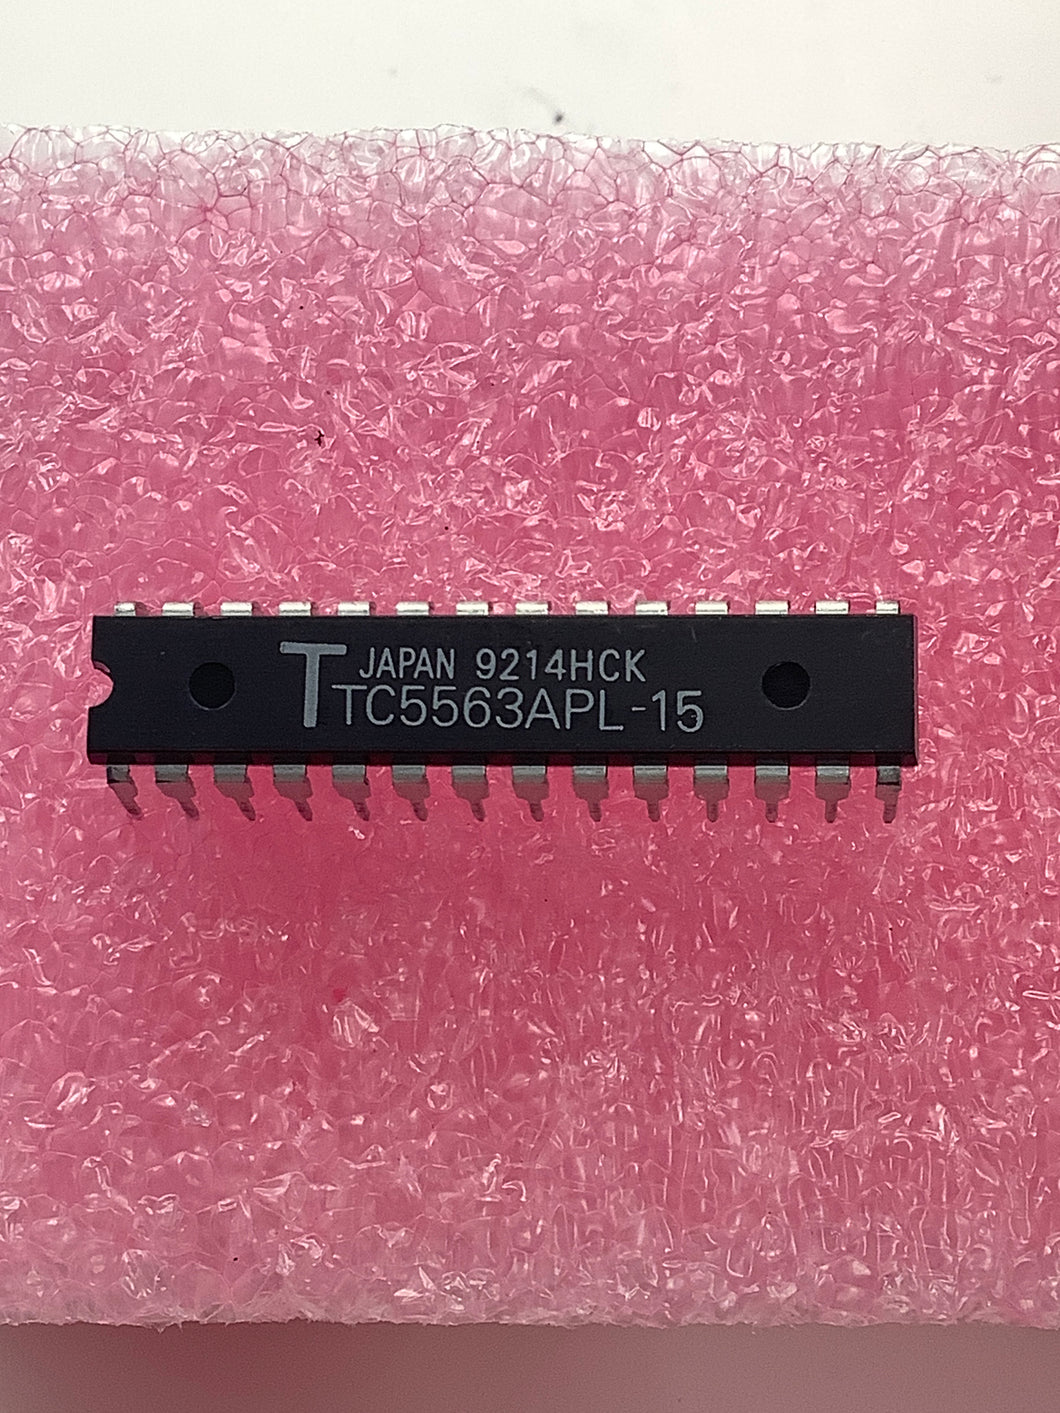 TC5563APL-15 - TOSHIBA - 65,536 bit static random access memory organized as 8,192 words by 8 bits using CMOS technology